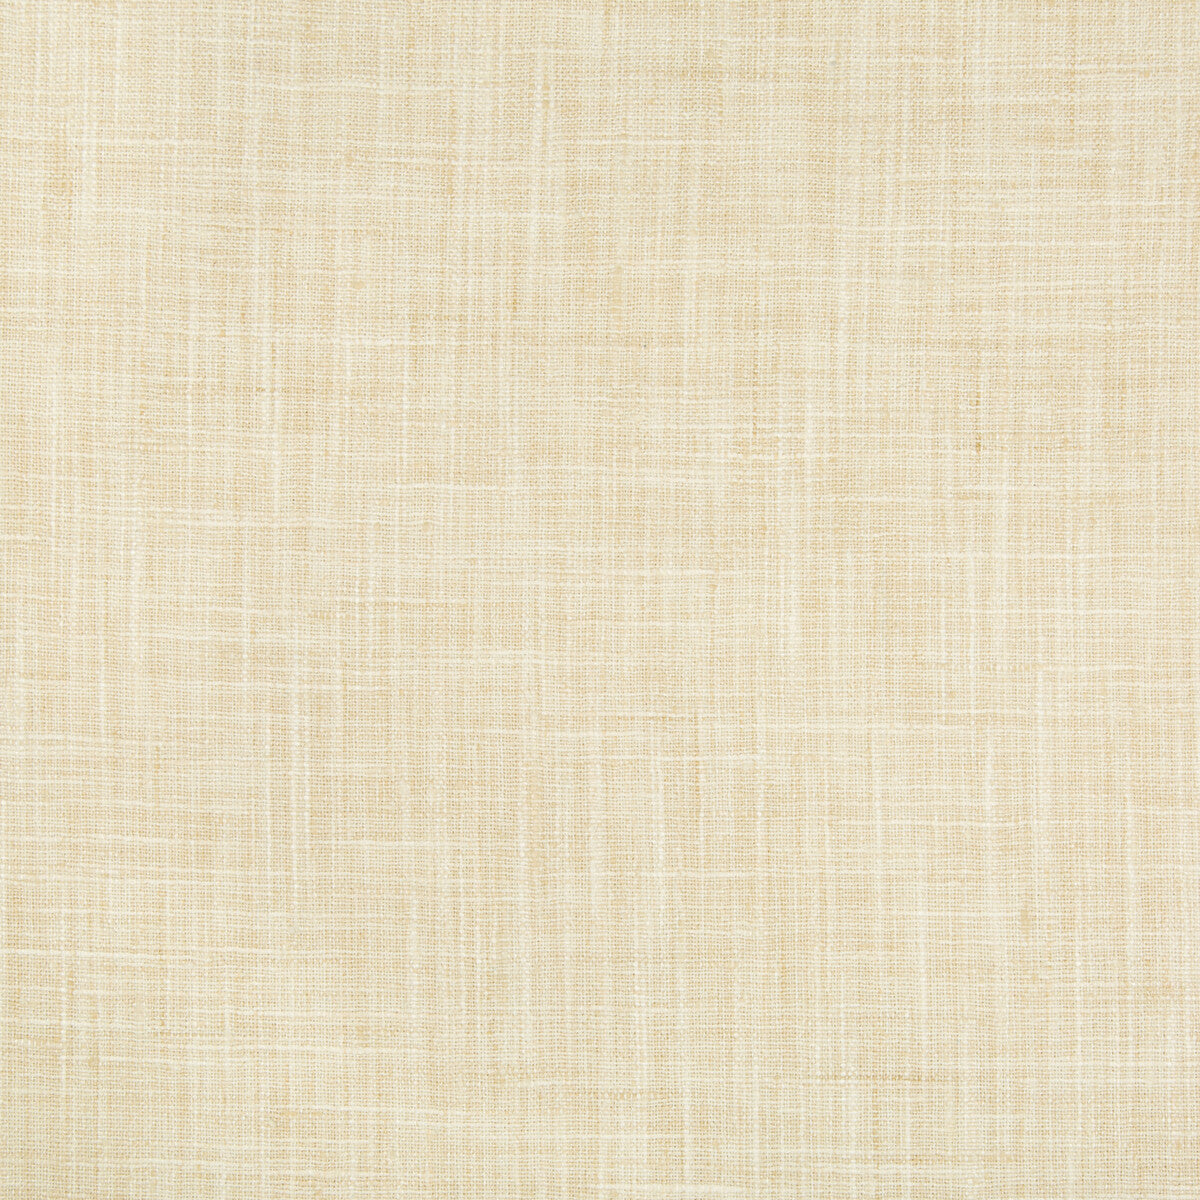 Kravet Smart fabric in 34983-1 color - pattern 34983.1.0 - by Kravet Smart